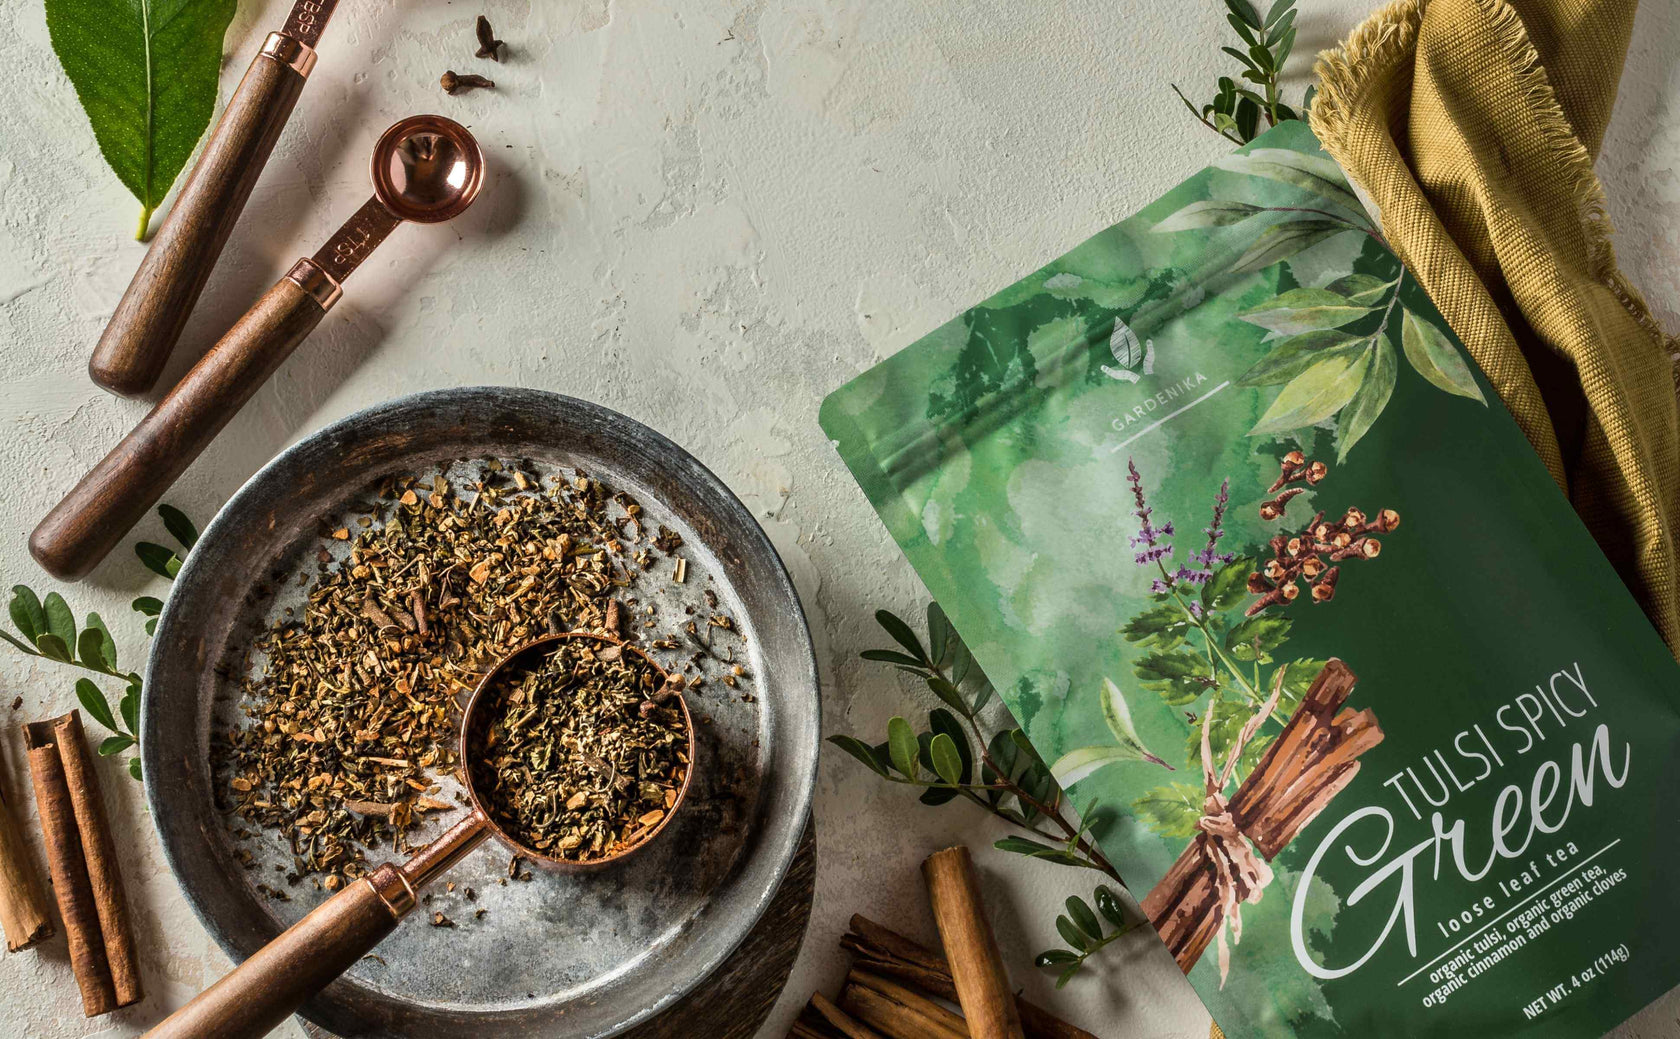 tulsi spicy green loose leaf organic tea cinnamon cloves gardenika 